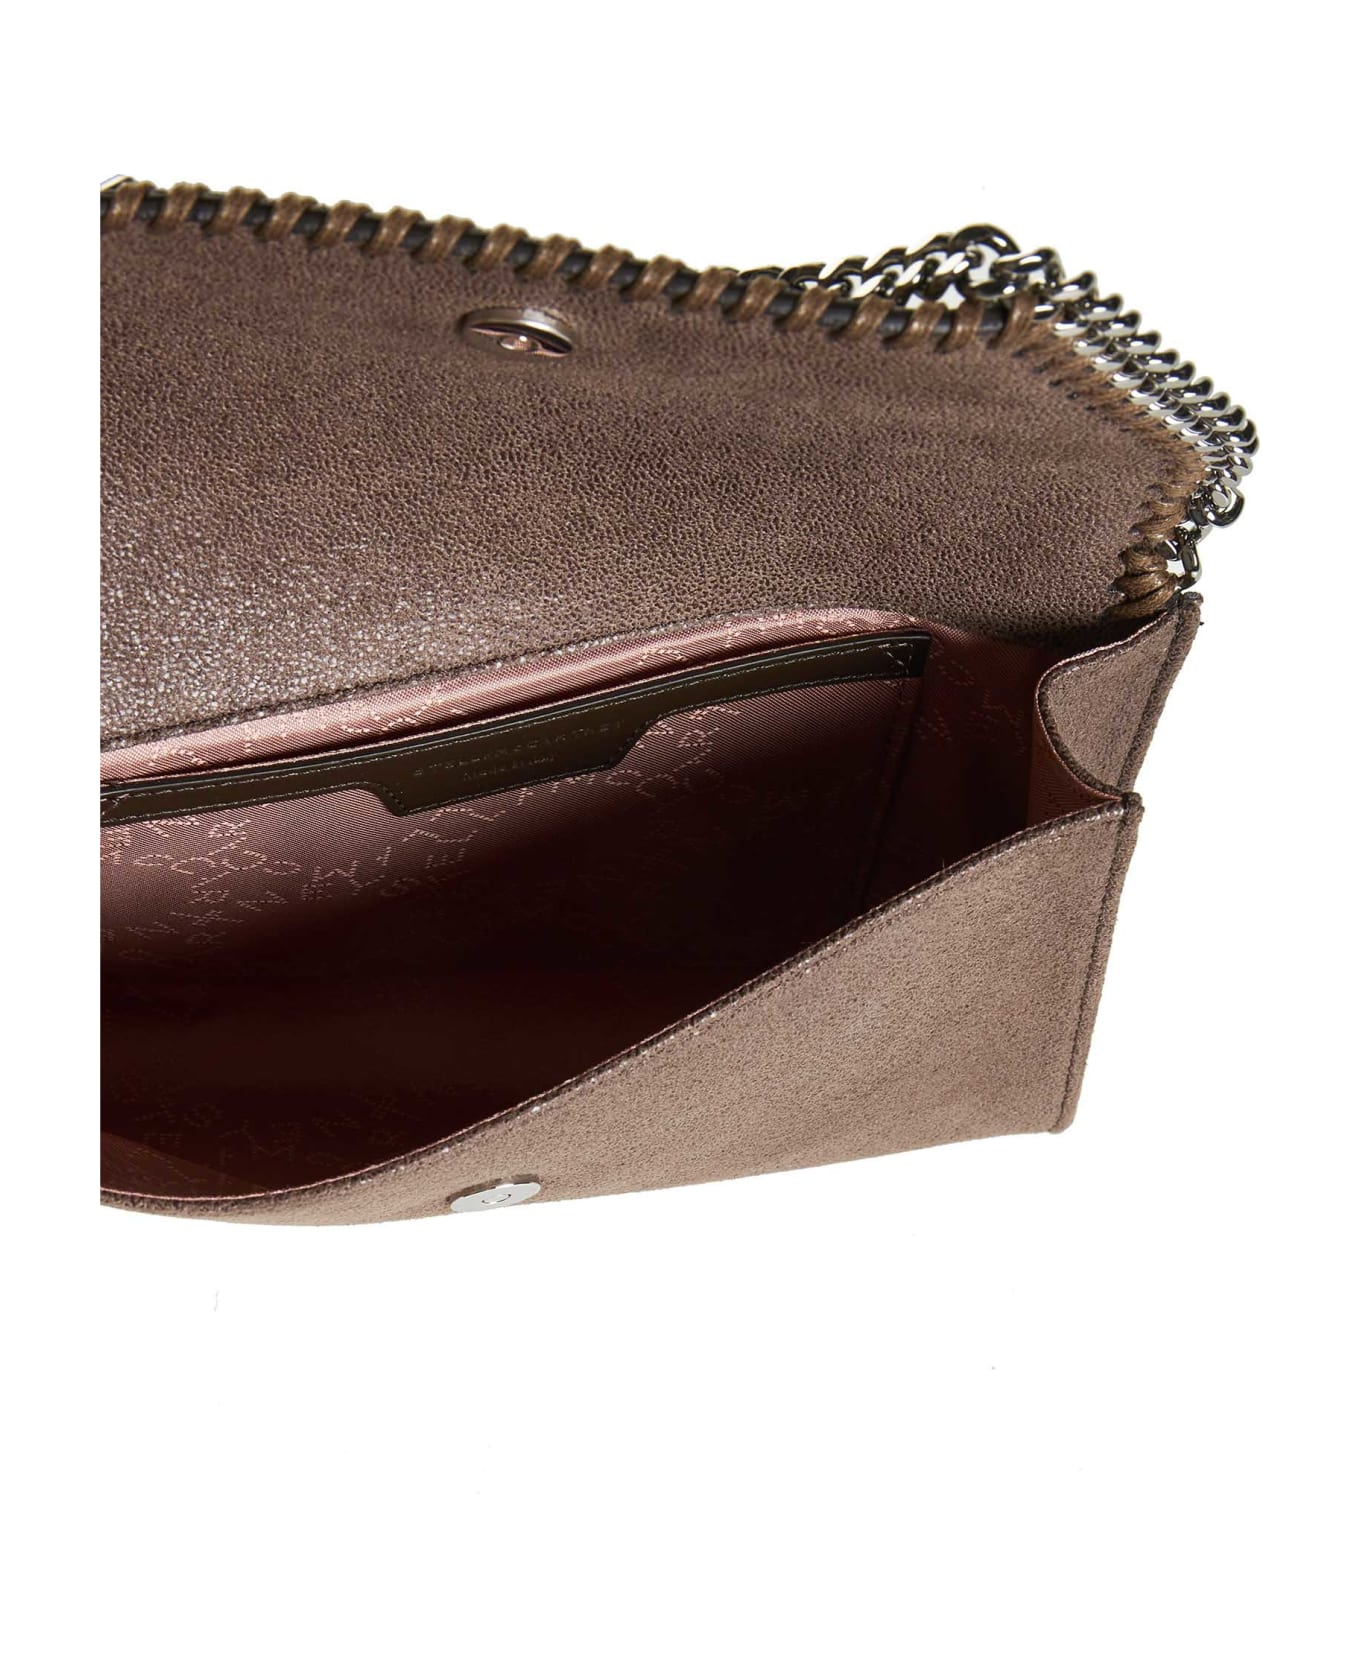 Stella McCartney Shoulder Bag - Dark taupe